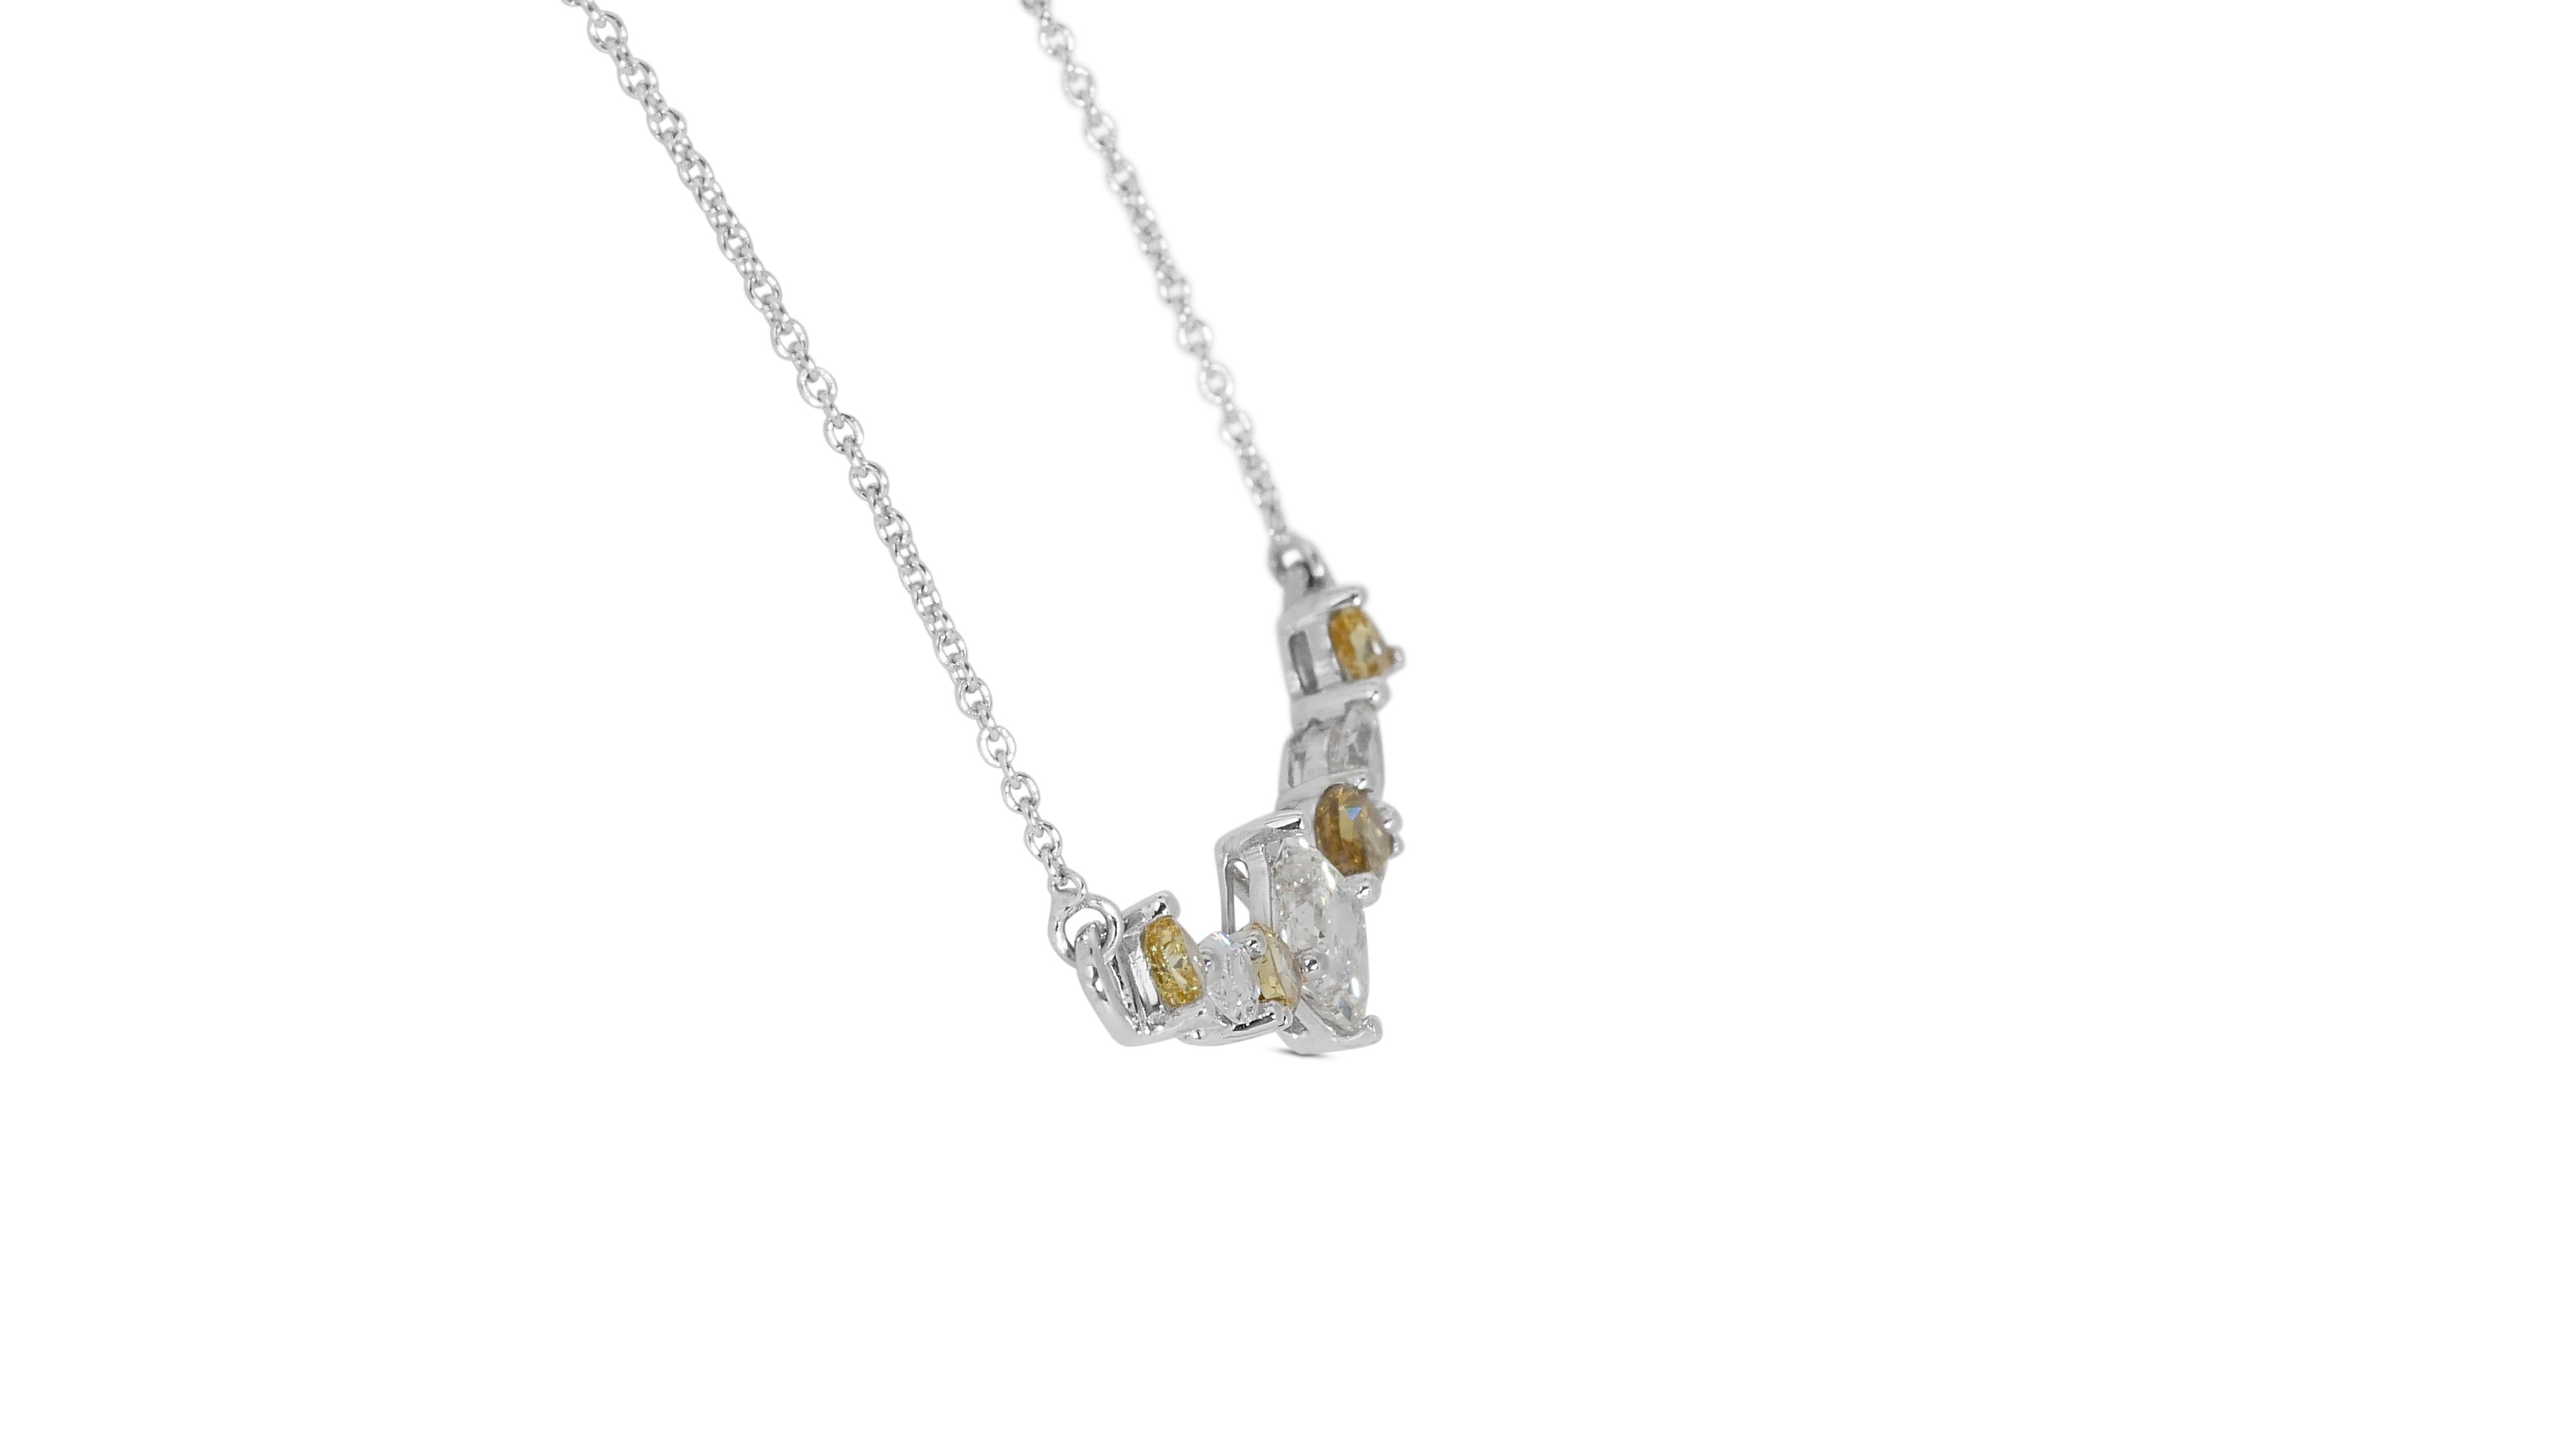 Women's Marvelous 18k White Gold Necklace w/ 1.9 Carat Natural Diamonds IGI Certificate For Sale